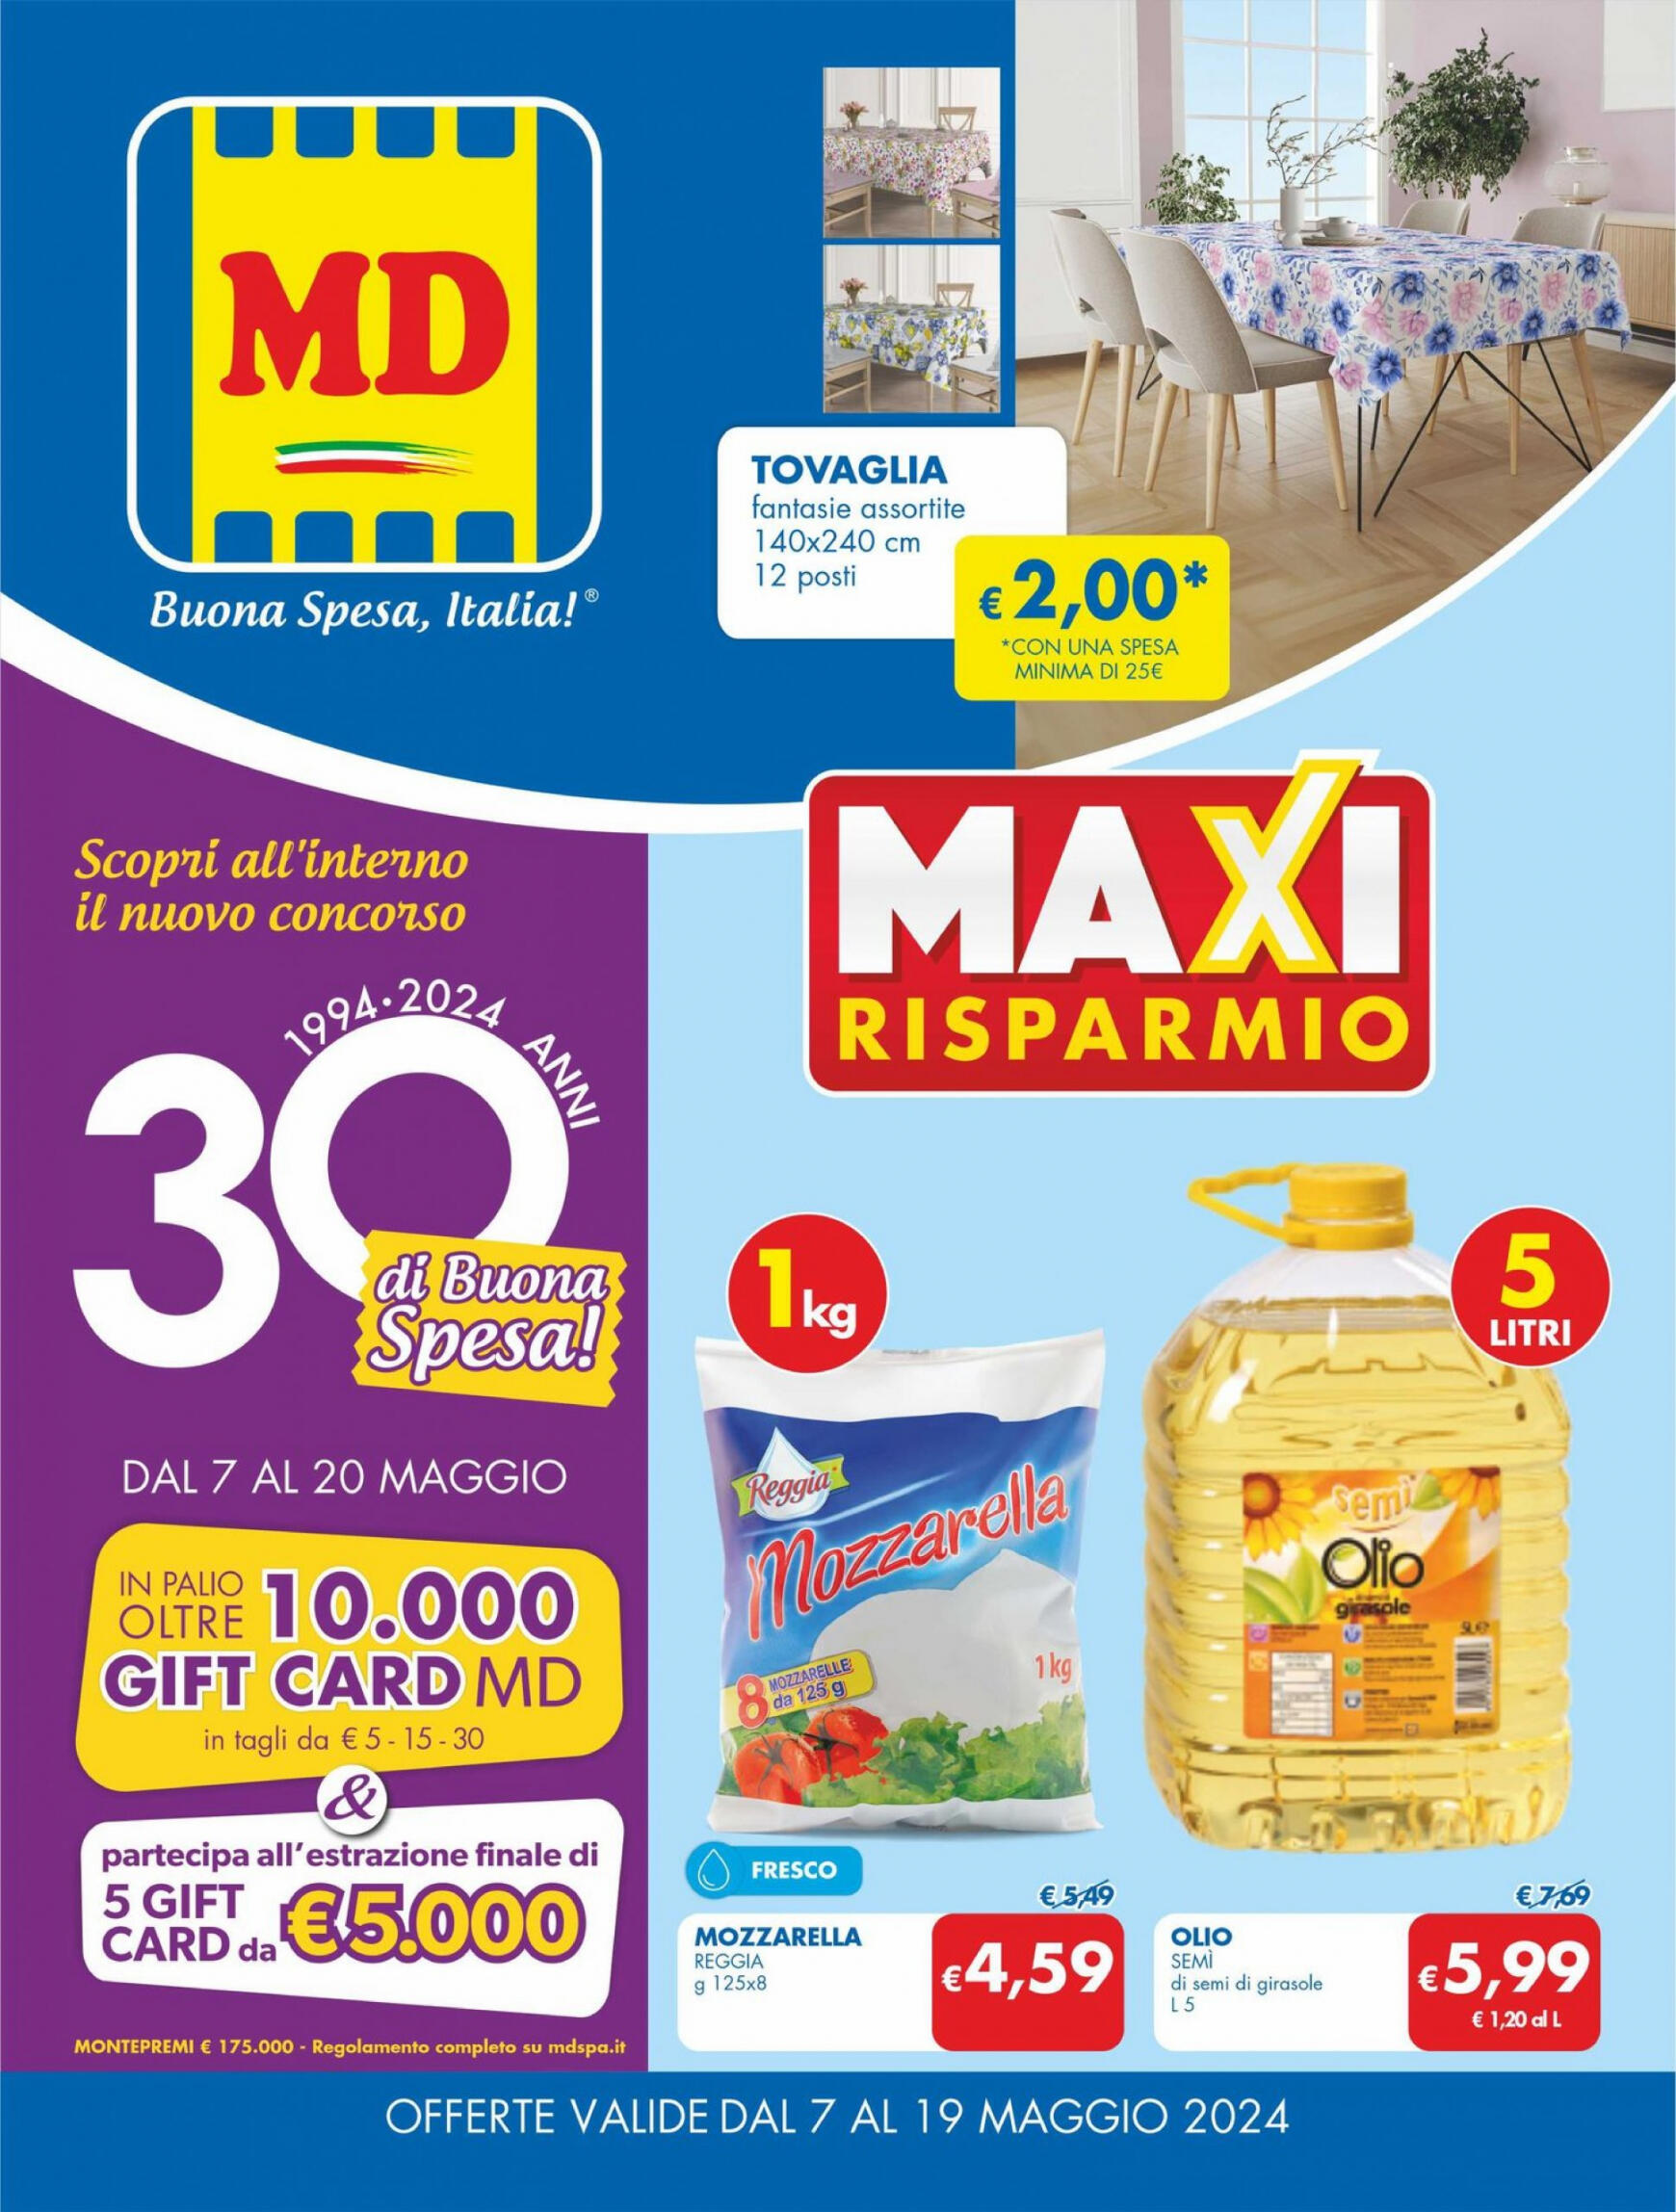 md-discount - Nuovo volantino MD - MD Discount 07.05. - 19.05.